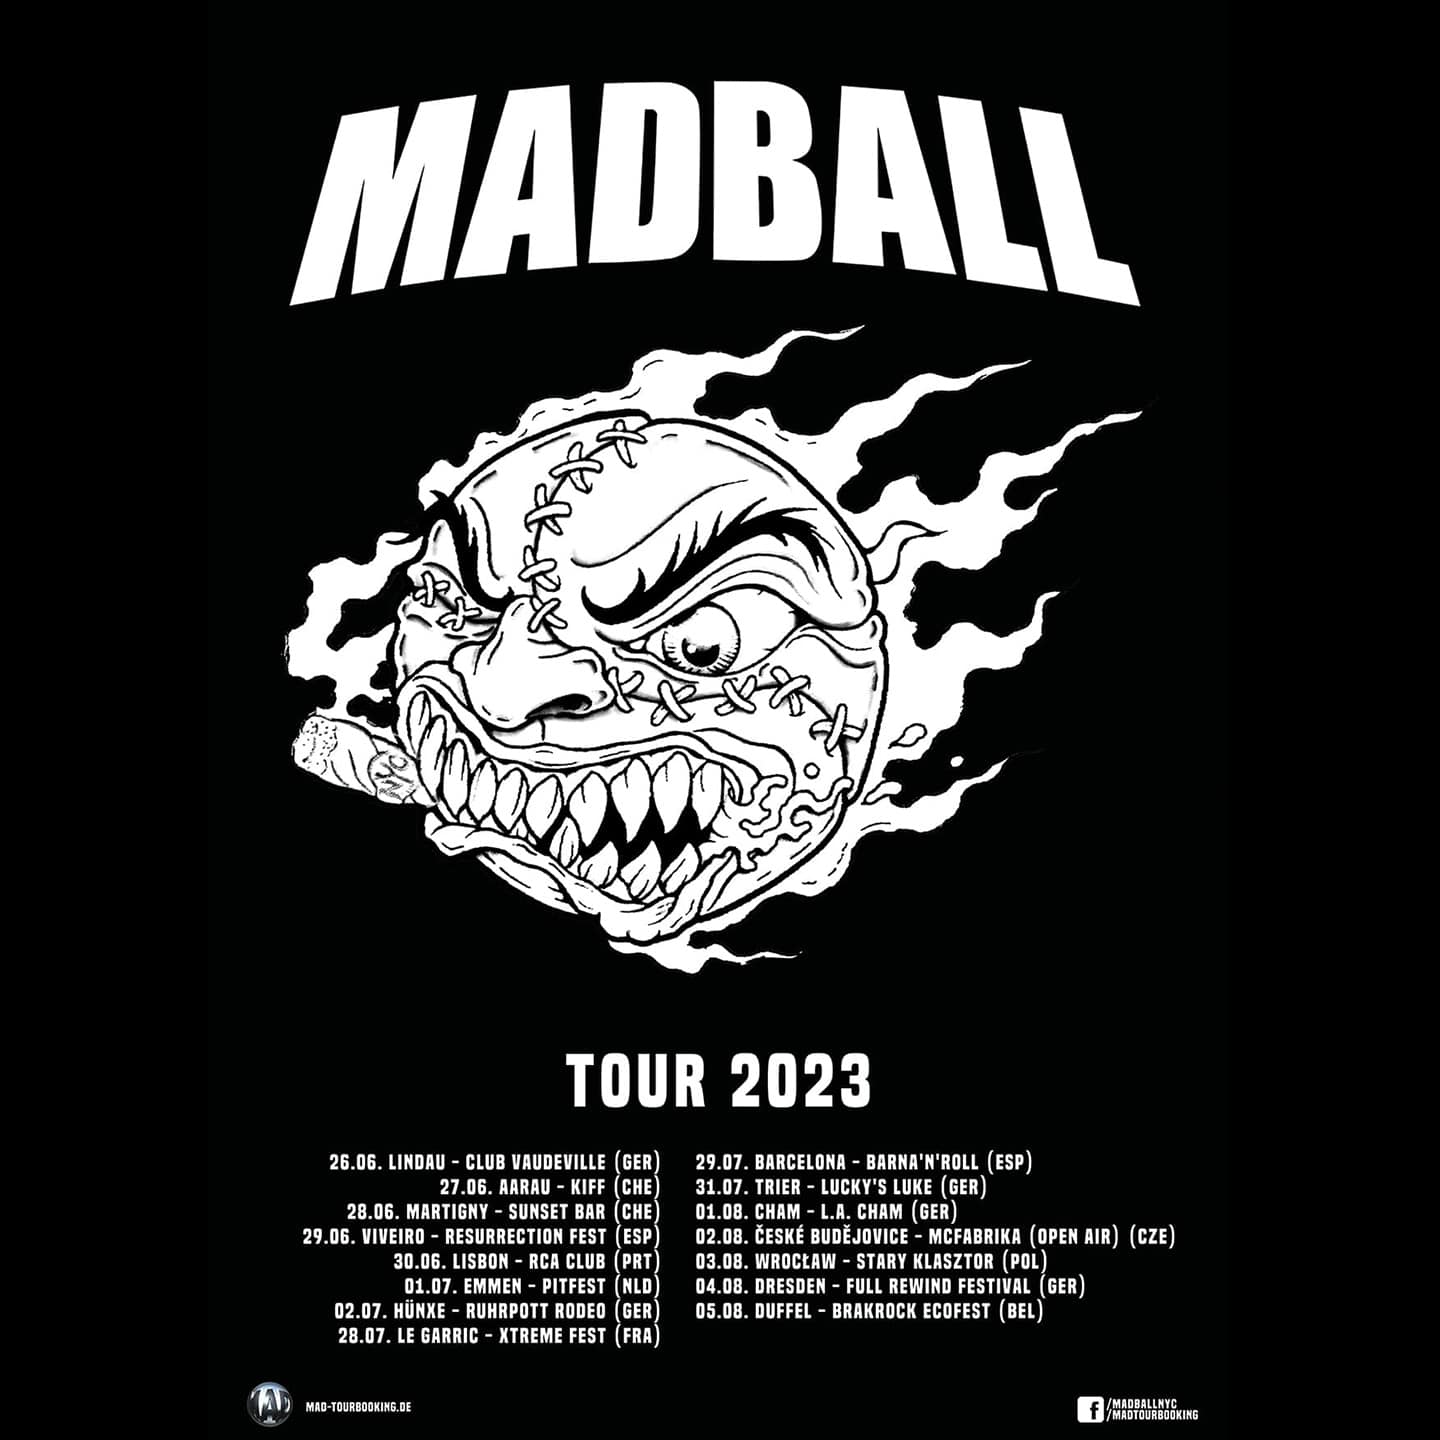 madball tour dates 2023